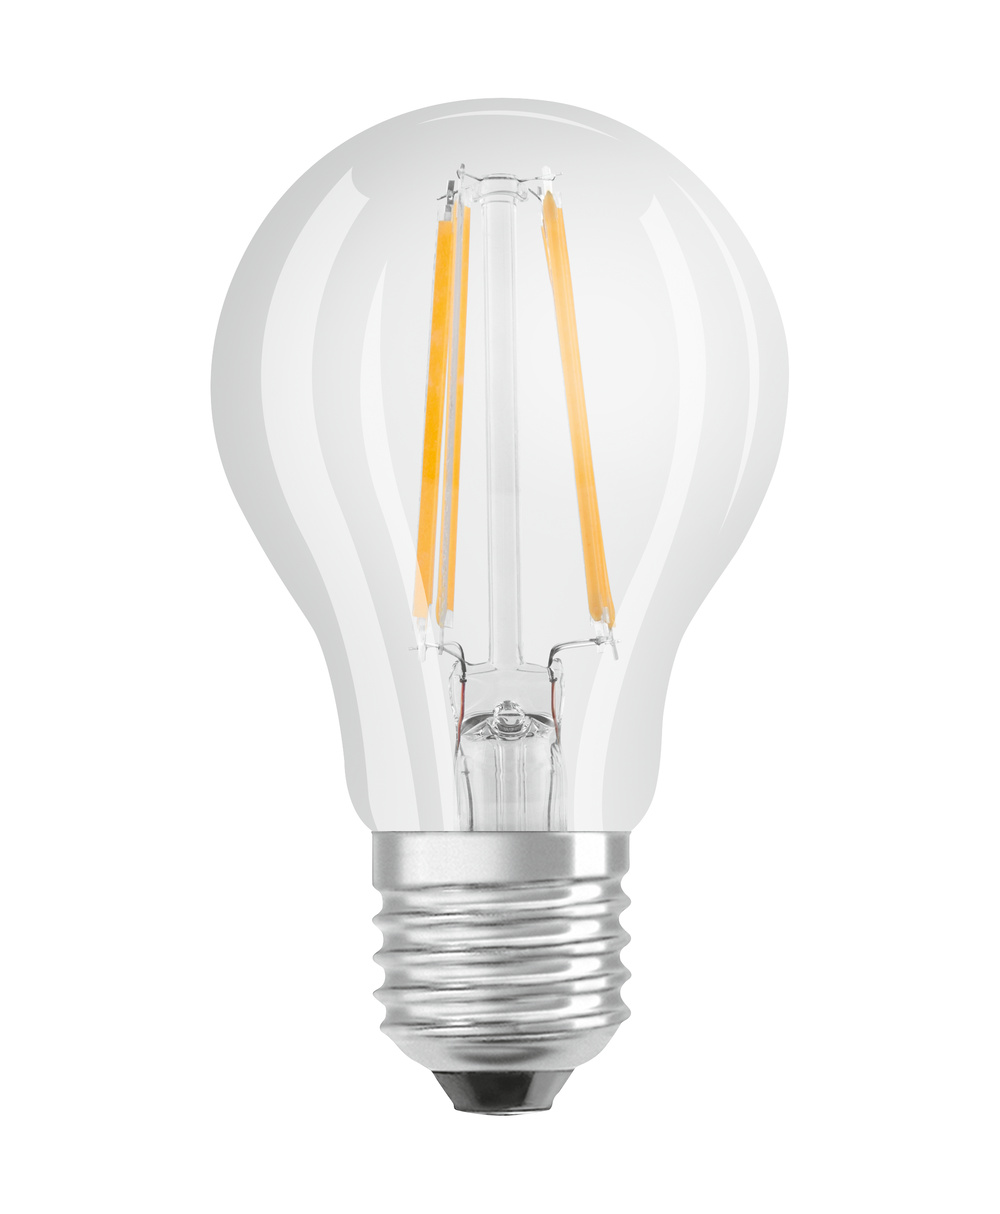 Ledvance LED lamp LED CLASSIC A DIM CRI97 S 4.2W 927 FIL CL E27 – 4099854065330 – replacement for 40 W - 4099854065330